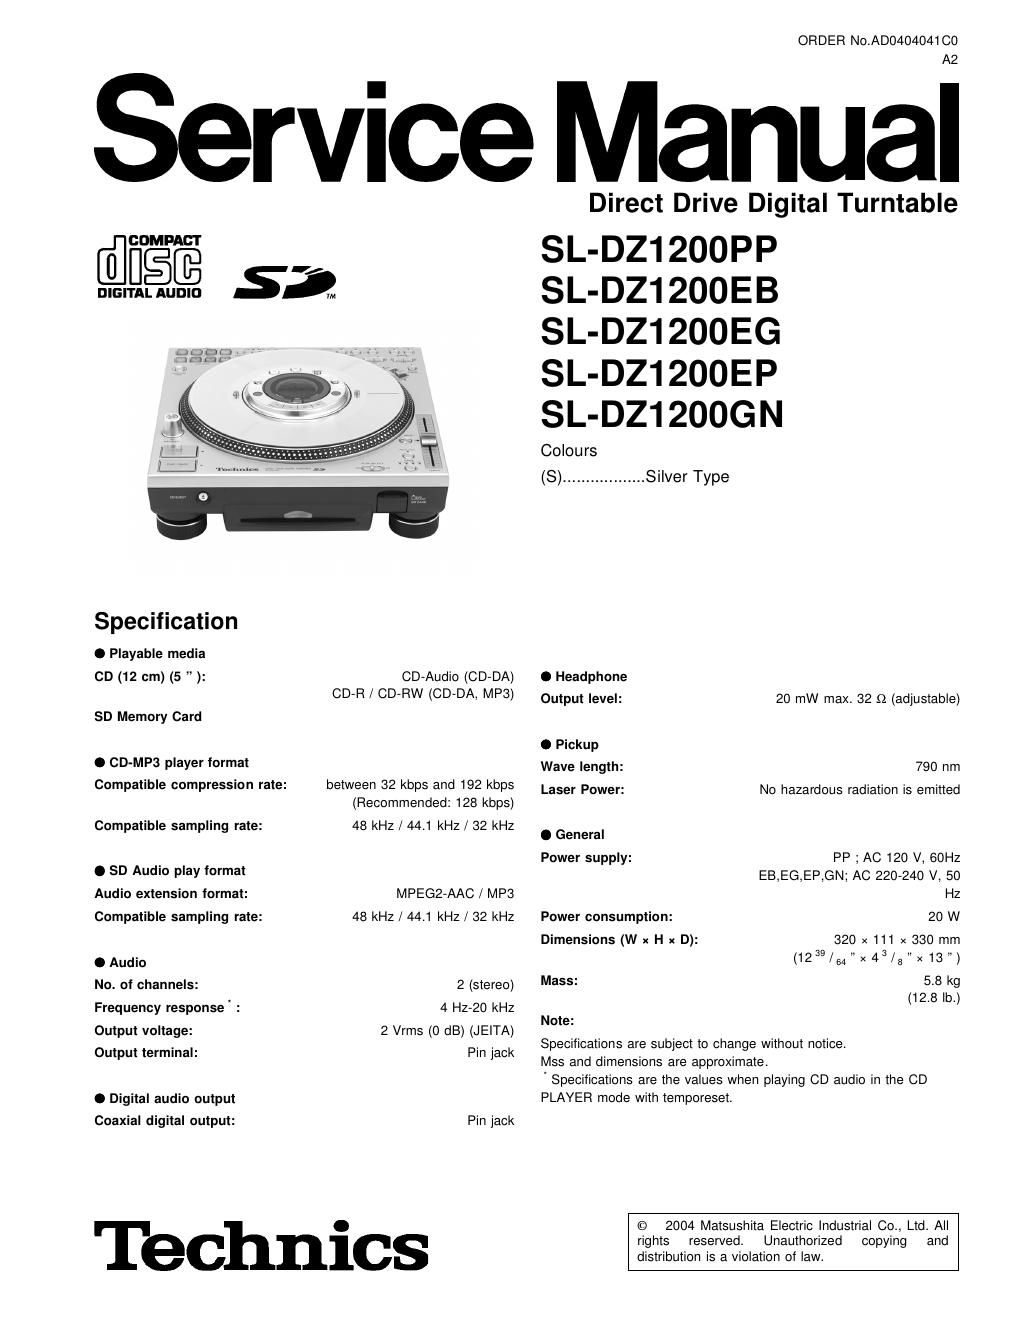 panasonic sl dz 1200 eb service manual